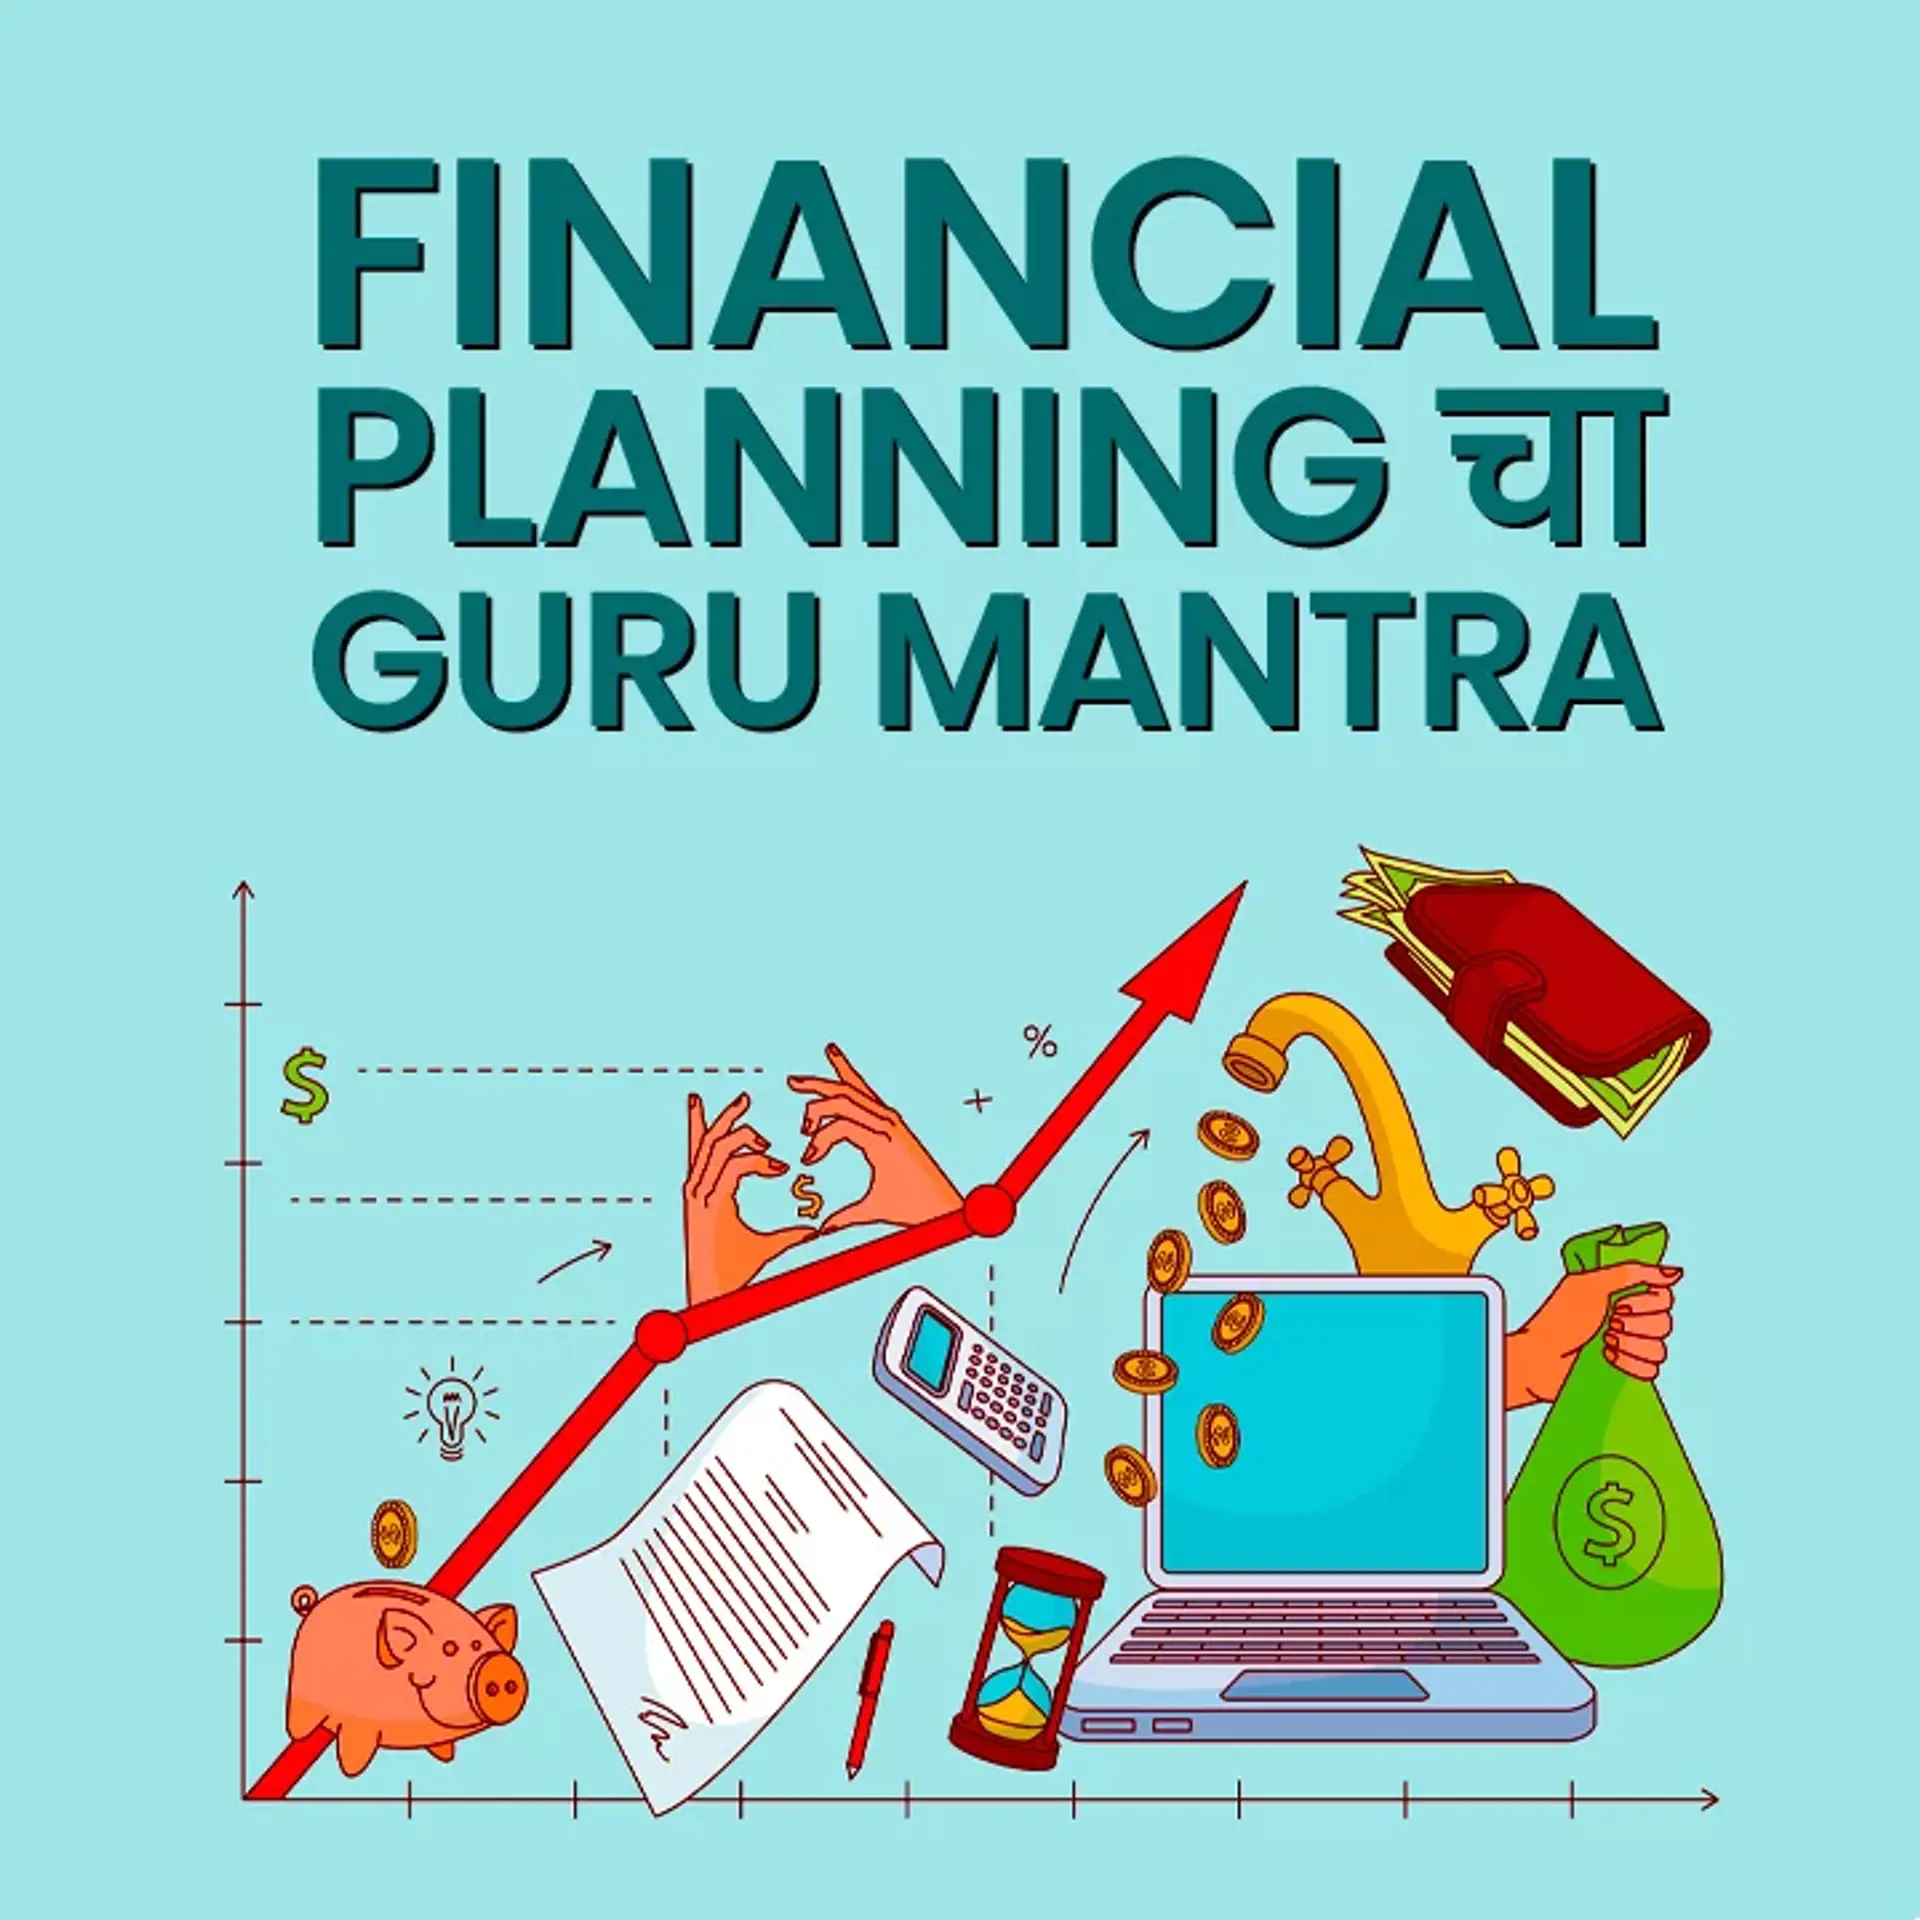 1. Financial planningchi journey | 